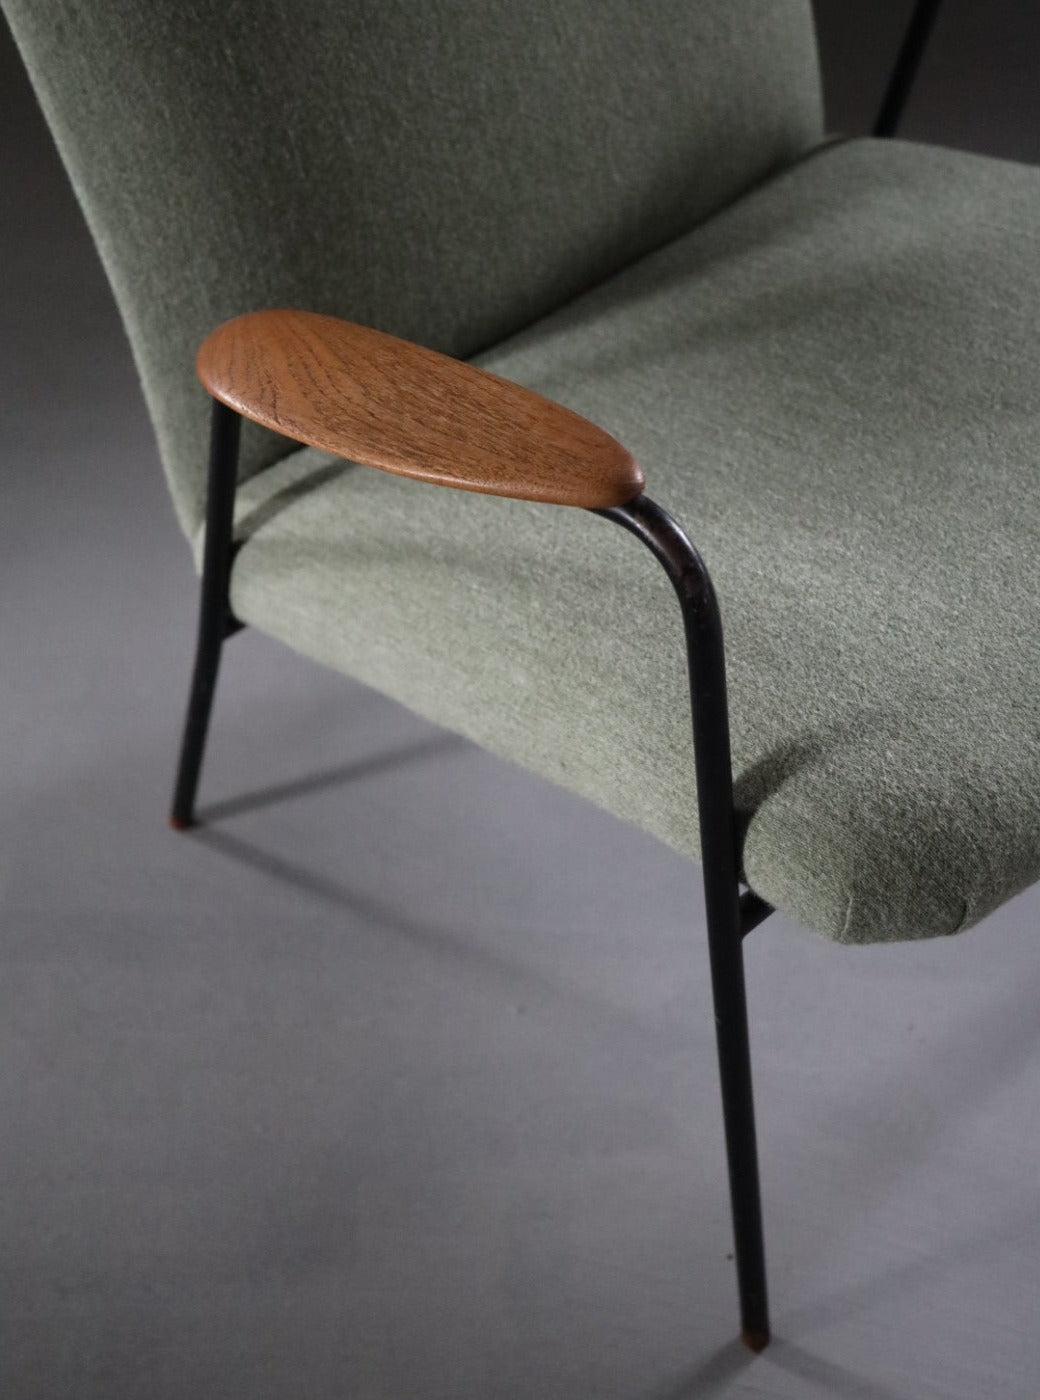 Contour adjustable high back lounge chair by Alf Svensson